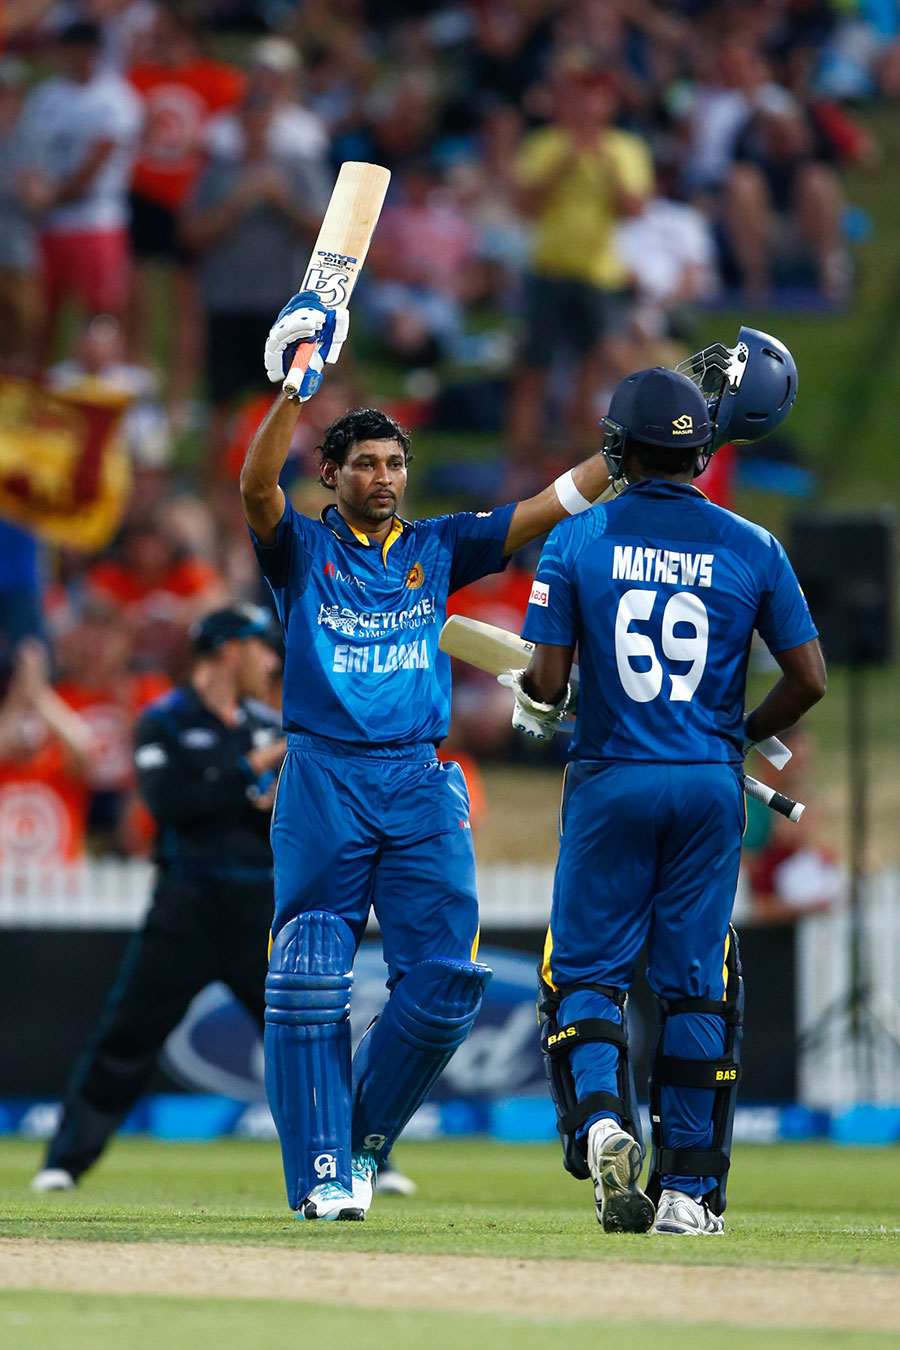 Tillakaratne Dilshan made his 19th ODI century during 2nd ODI between New Zealand and Sri Lanka at Hamilton on Thursday.